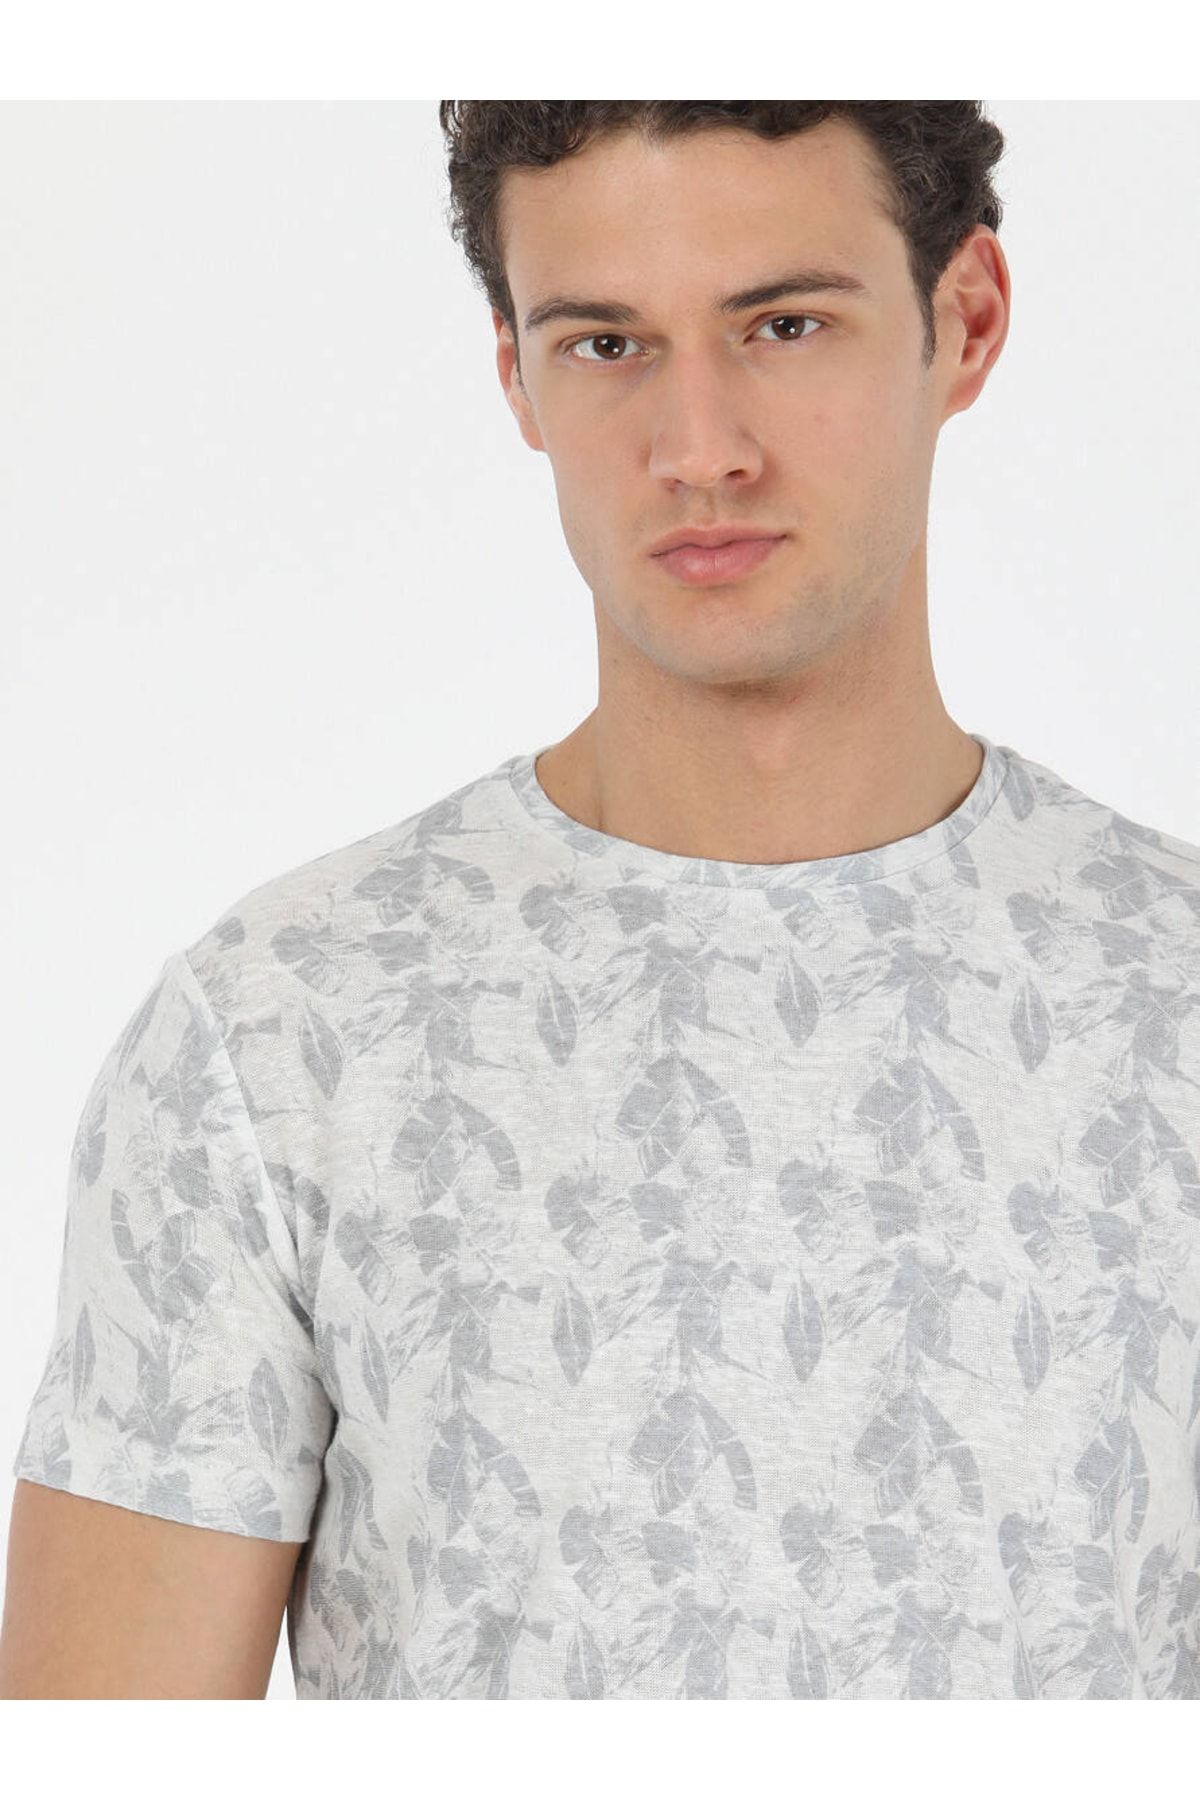 Kip تی شرت مخلوط پنبه یقه ای بژ چاپ شده